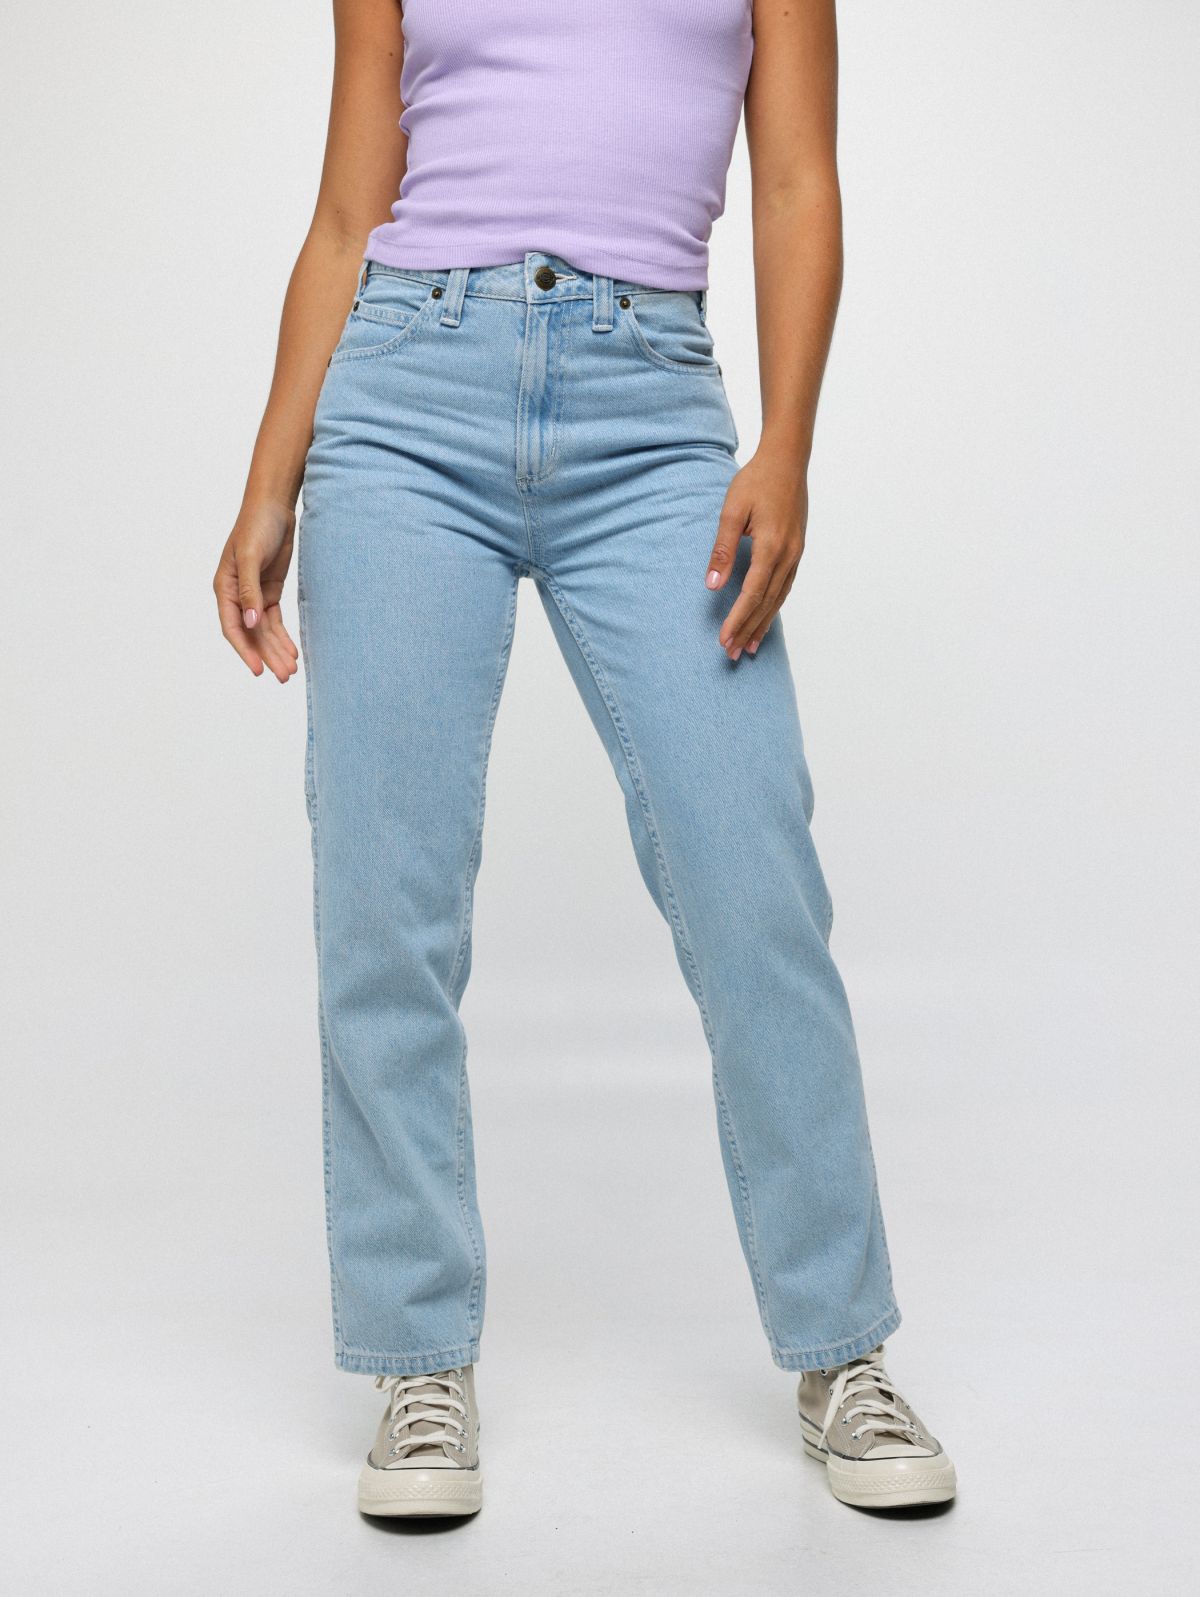  ג'ינס בגזרה ישרה ELLENDALE של DICKIES